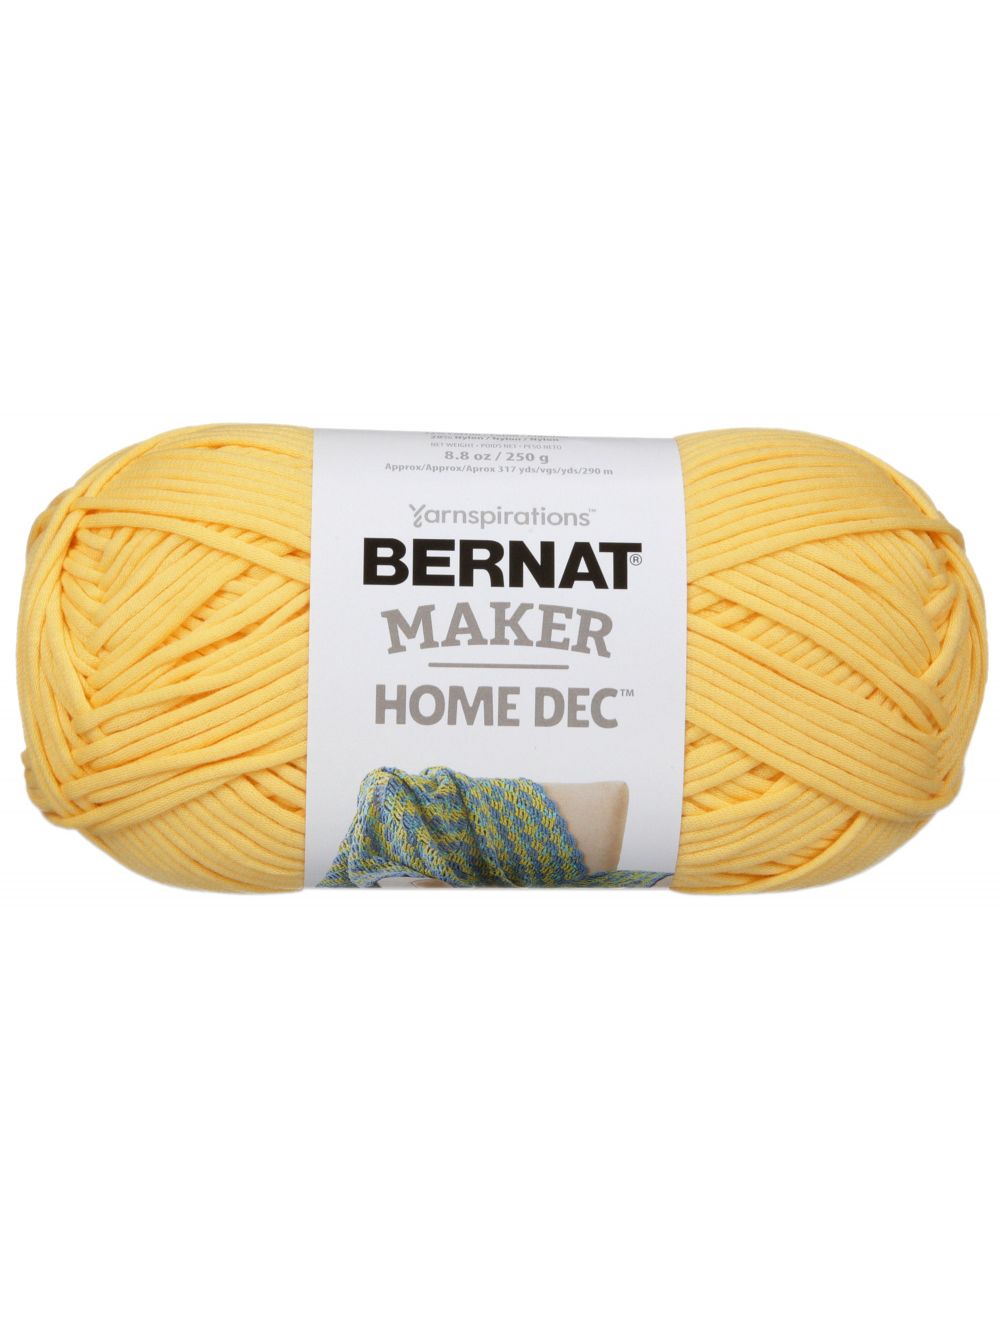 Bernat Maker Home Dec Yarn - Pebble Beach Variegate